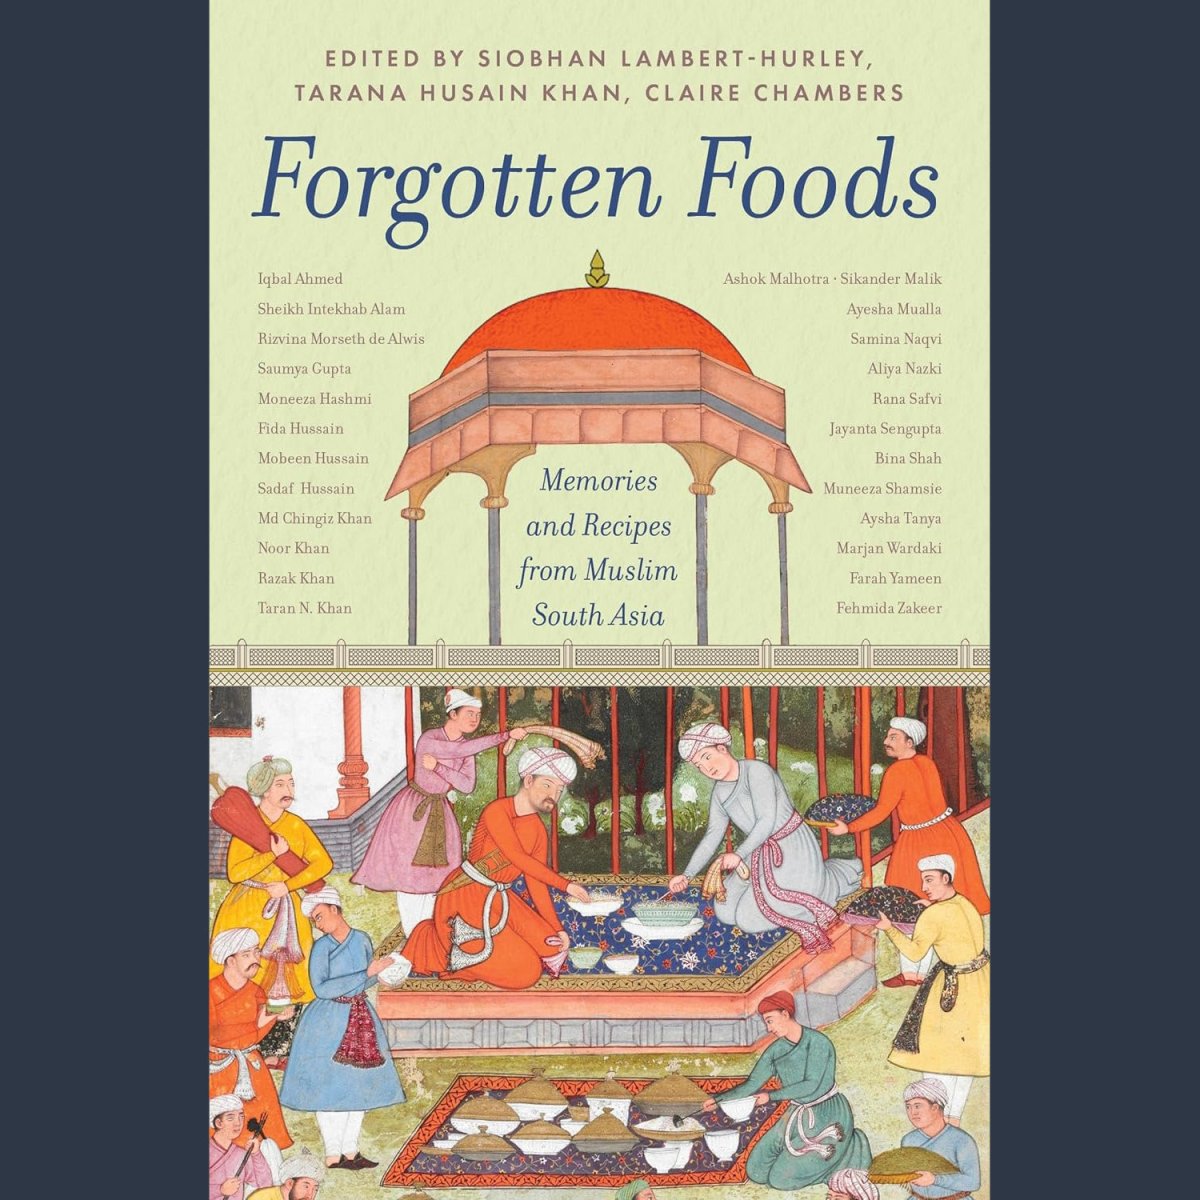 Book Review: Forgotten Foods